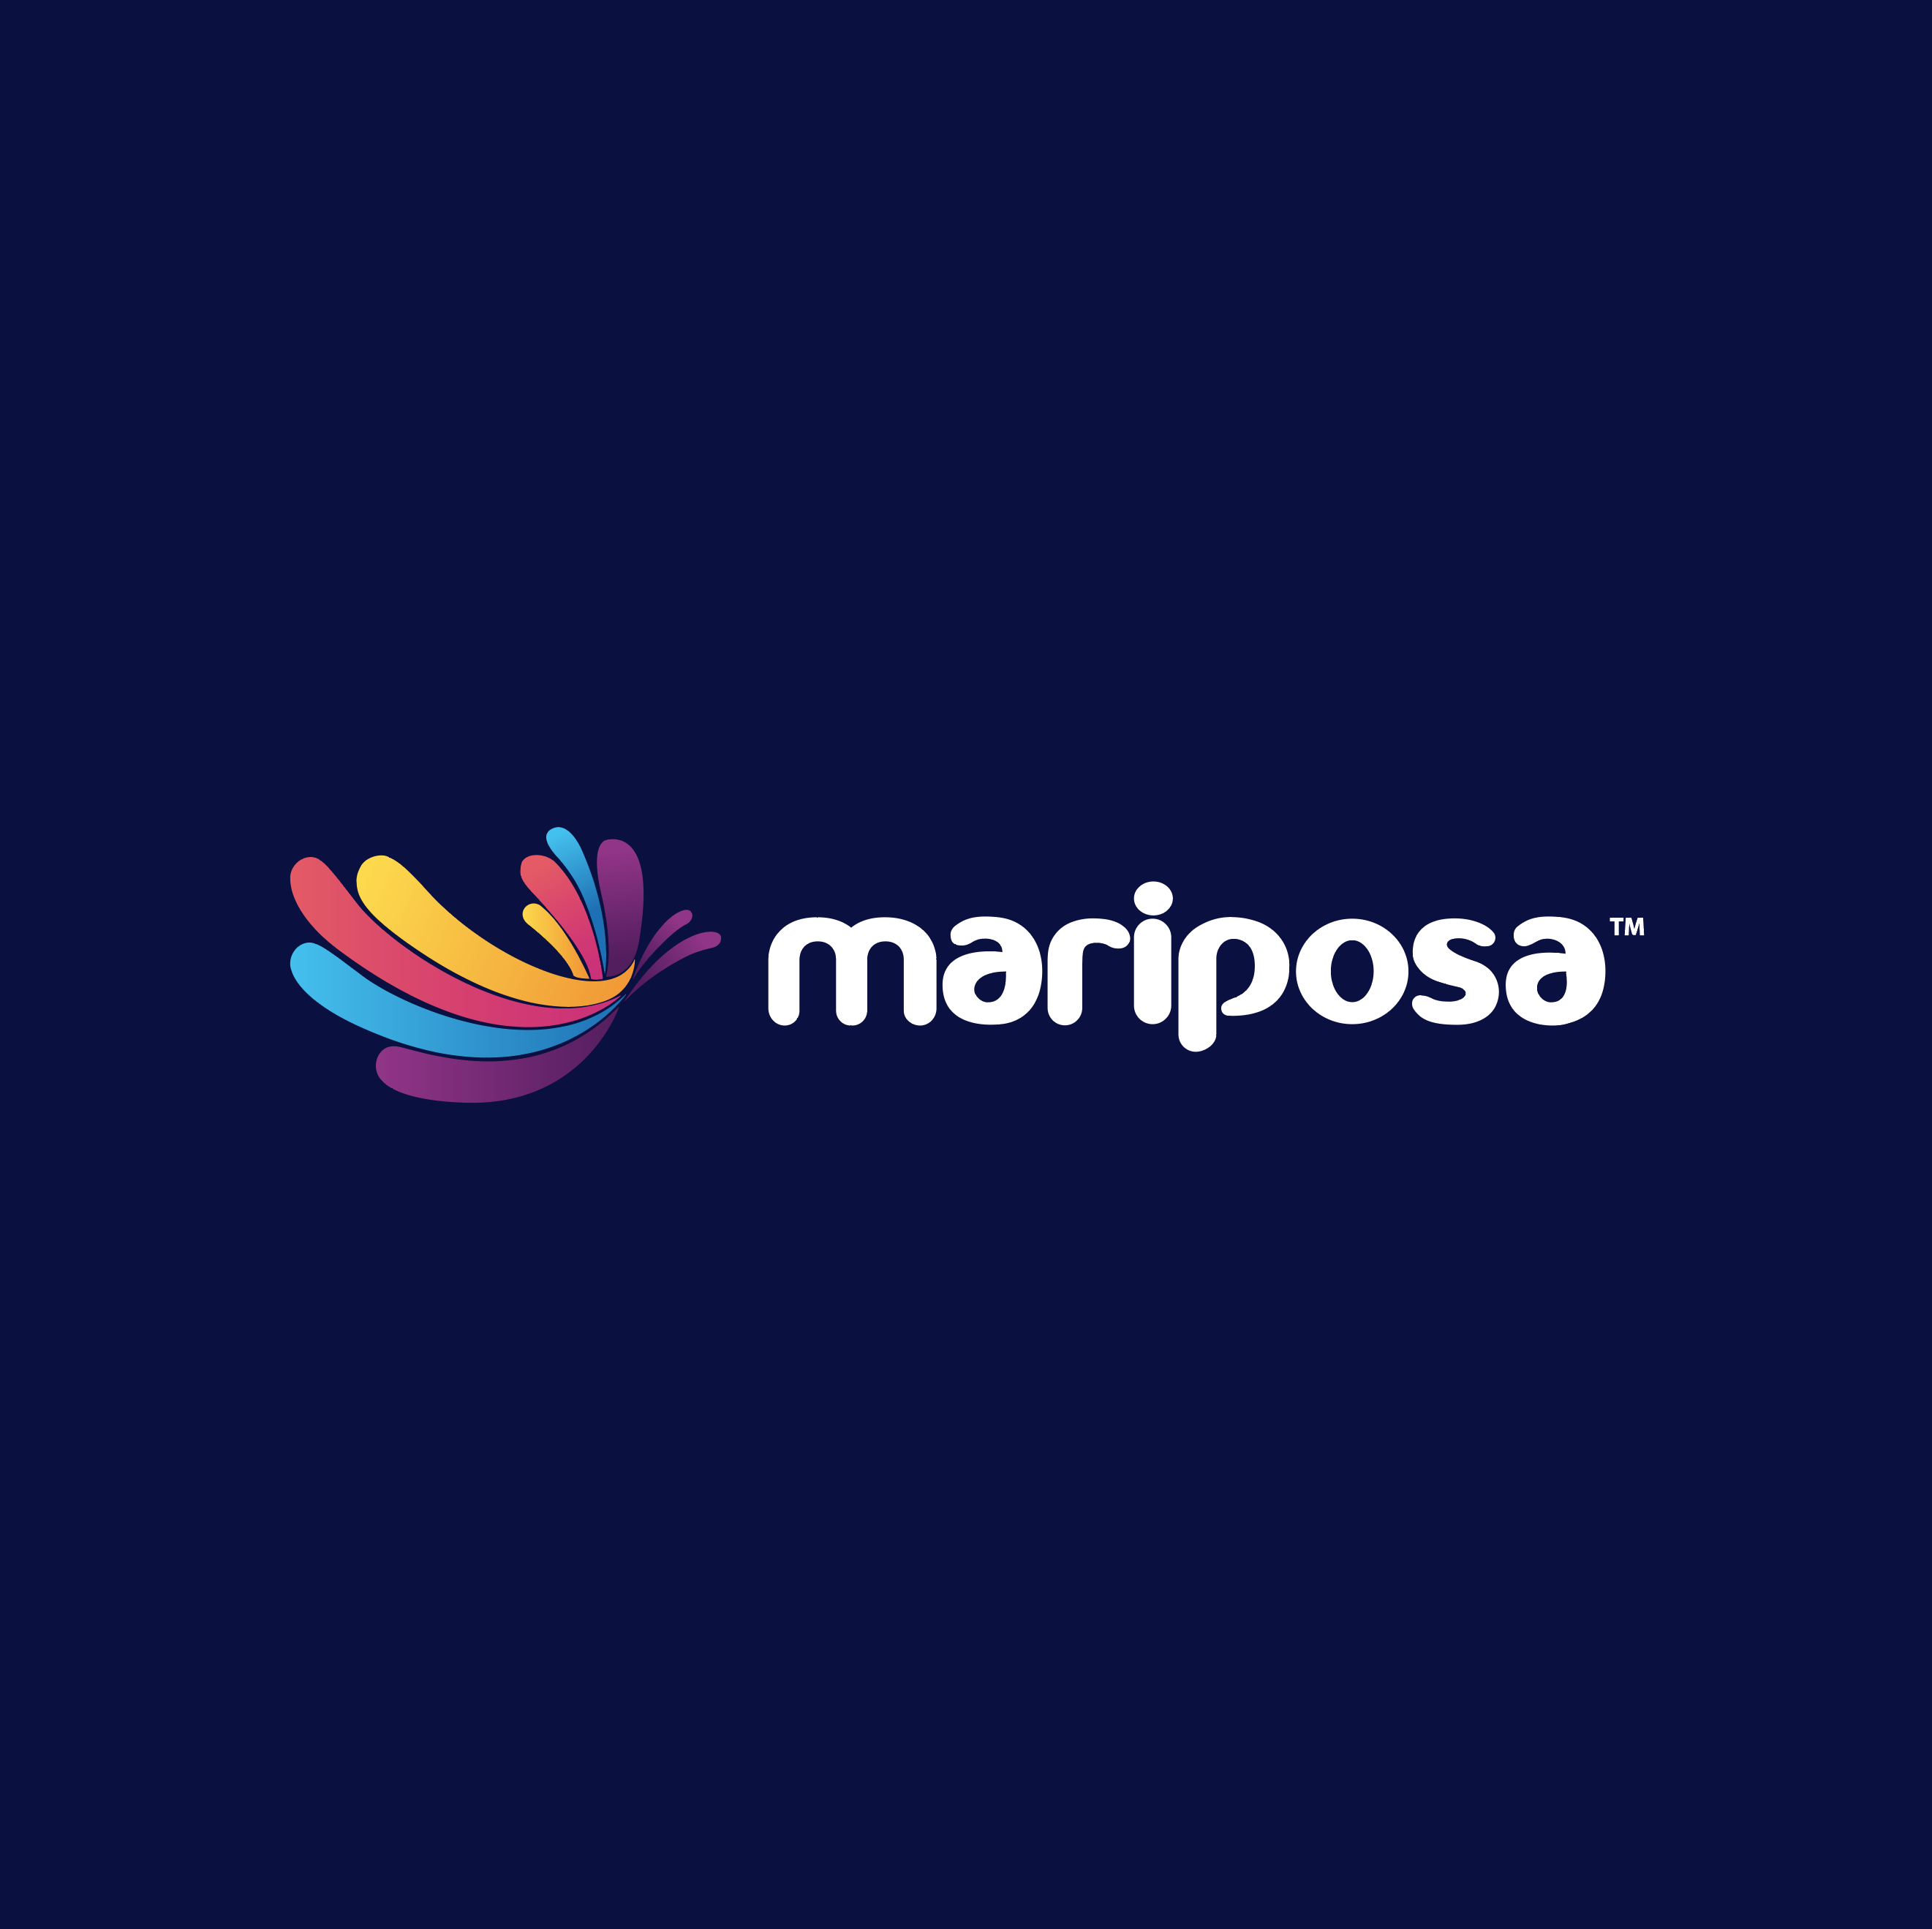 Mariposa Painting & Decorating's logo